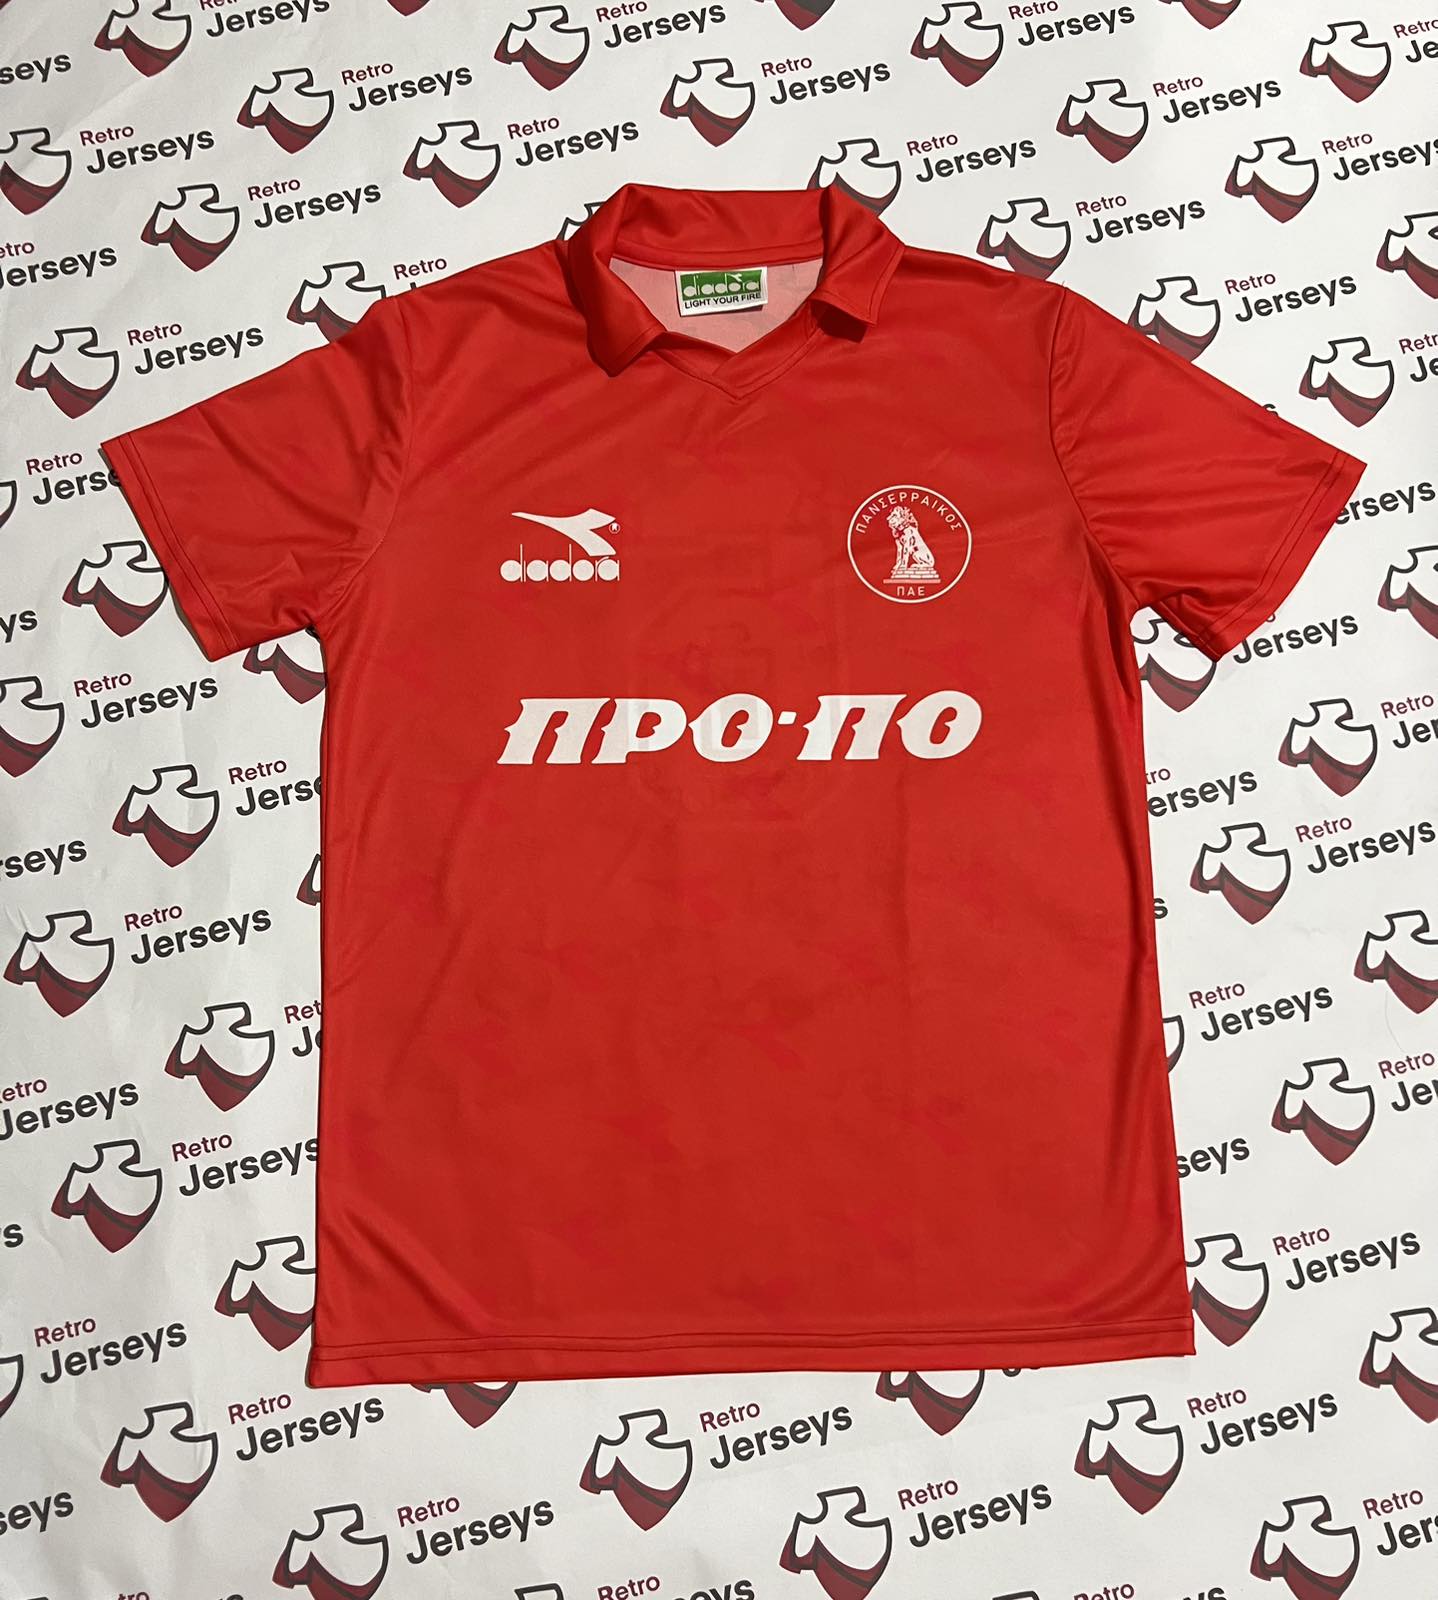 Panserraikos Shirt 1995-1996 Home - Retro Jerseys, φανέλα πανσερραϊκός - Retro Jerseys